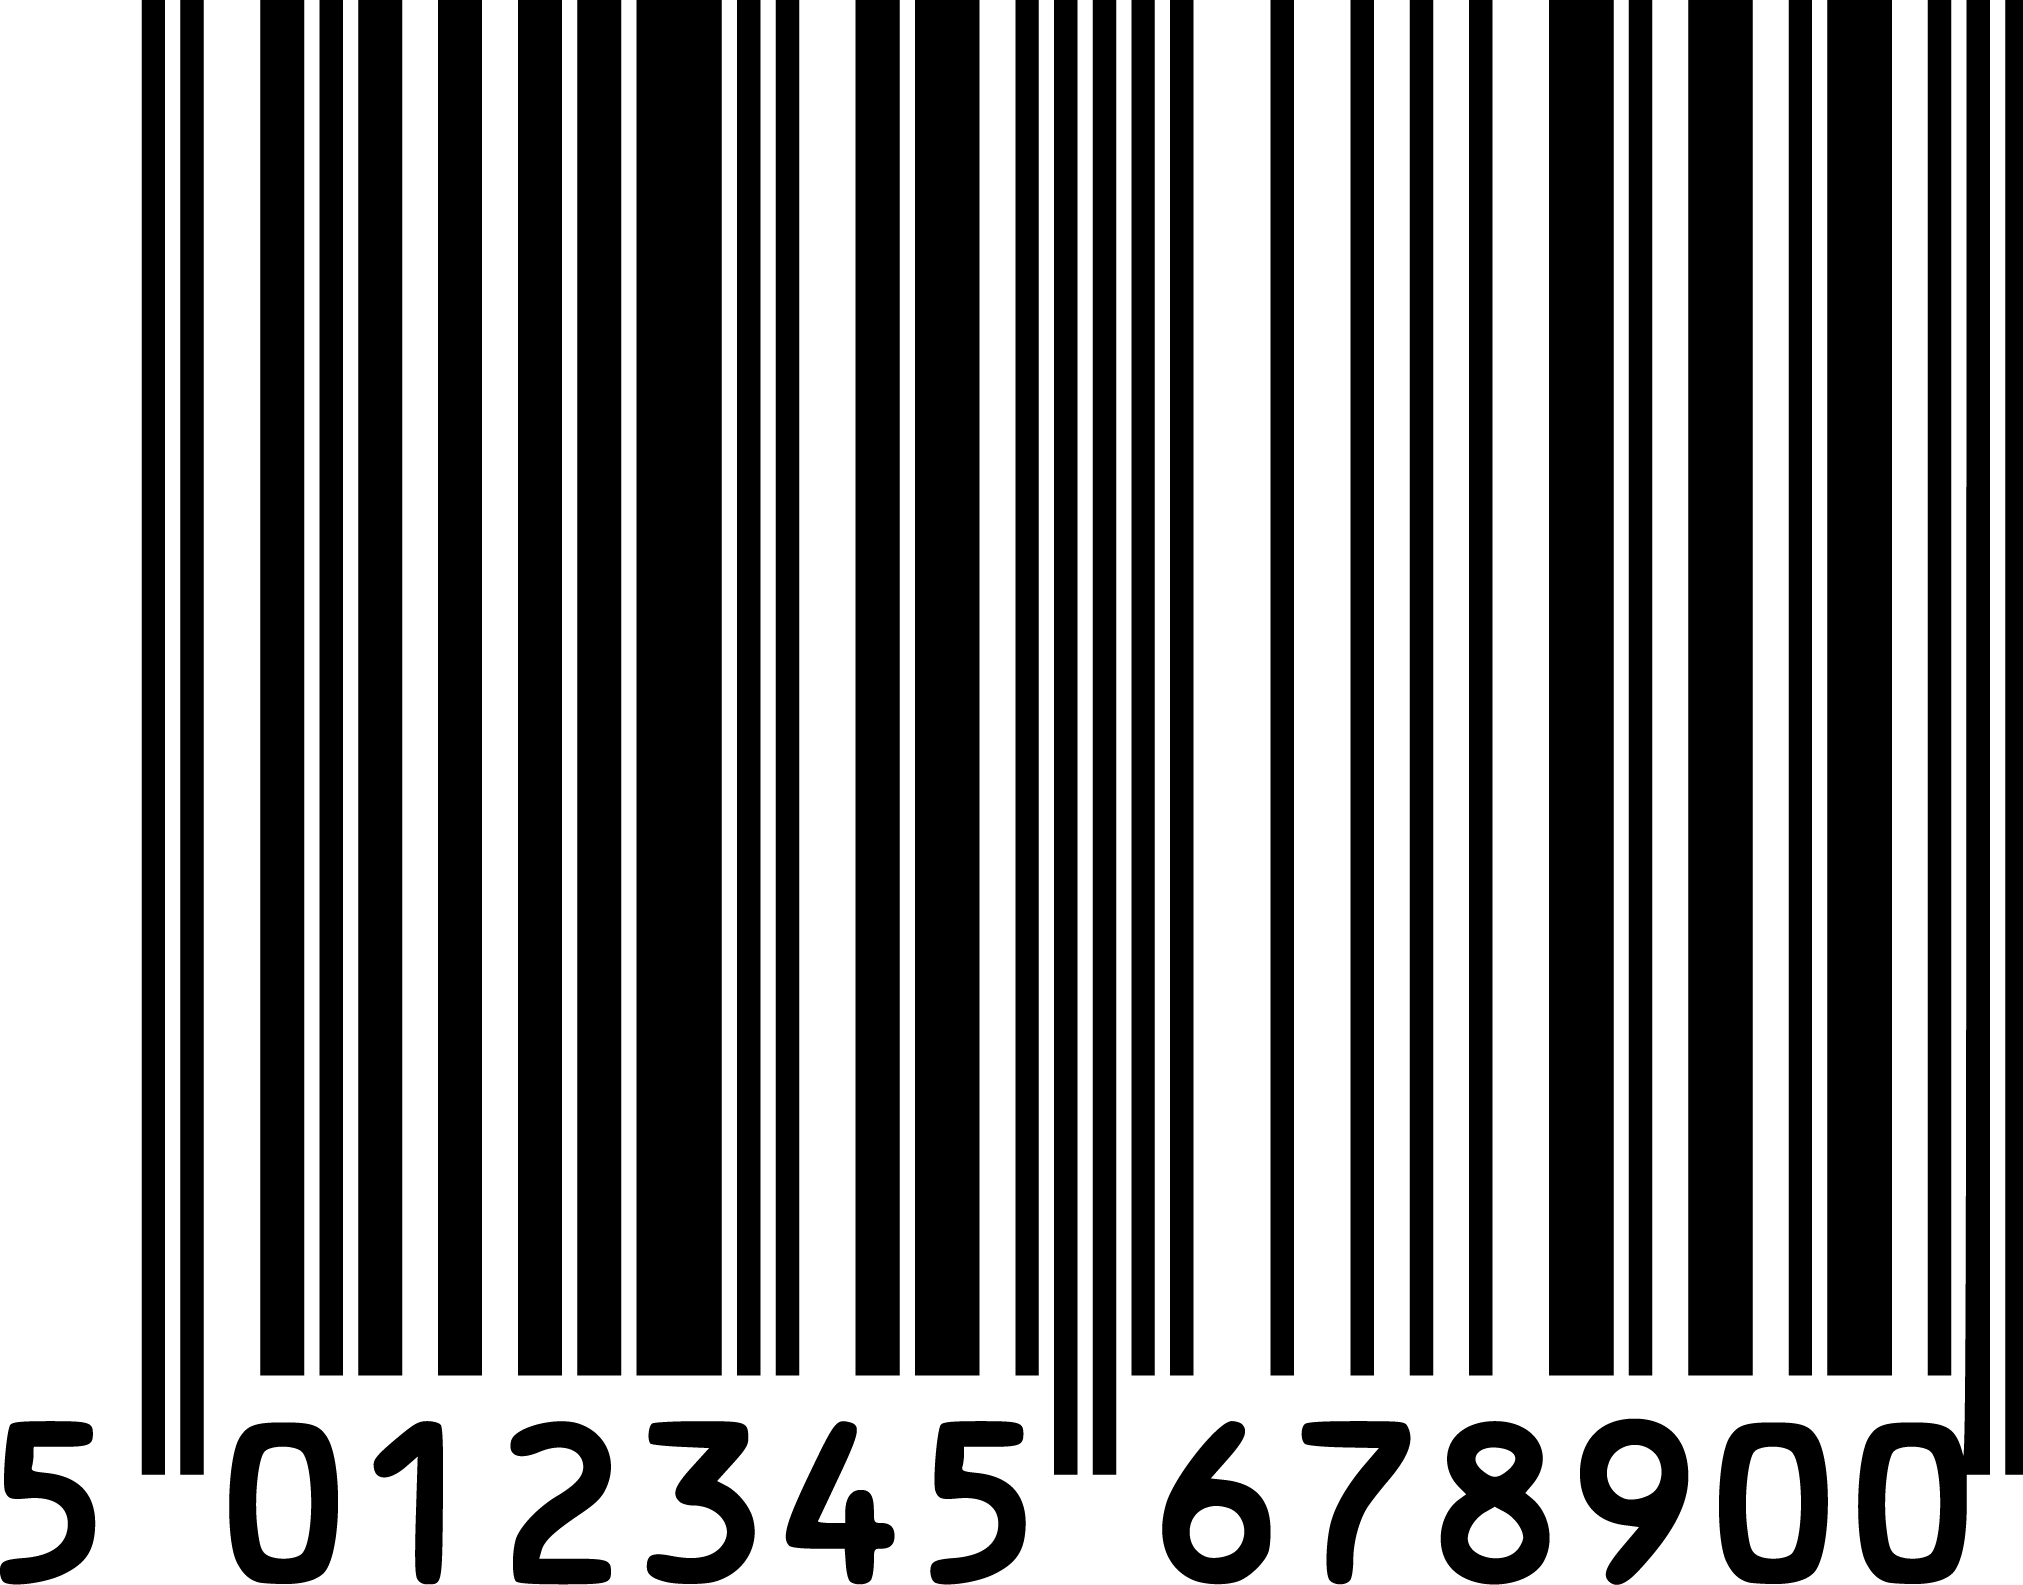 Barcode Scan Transparent Image